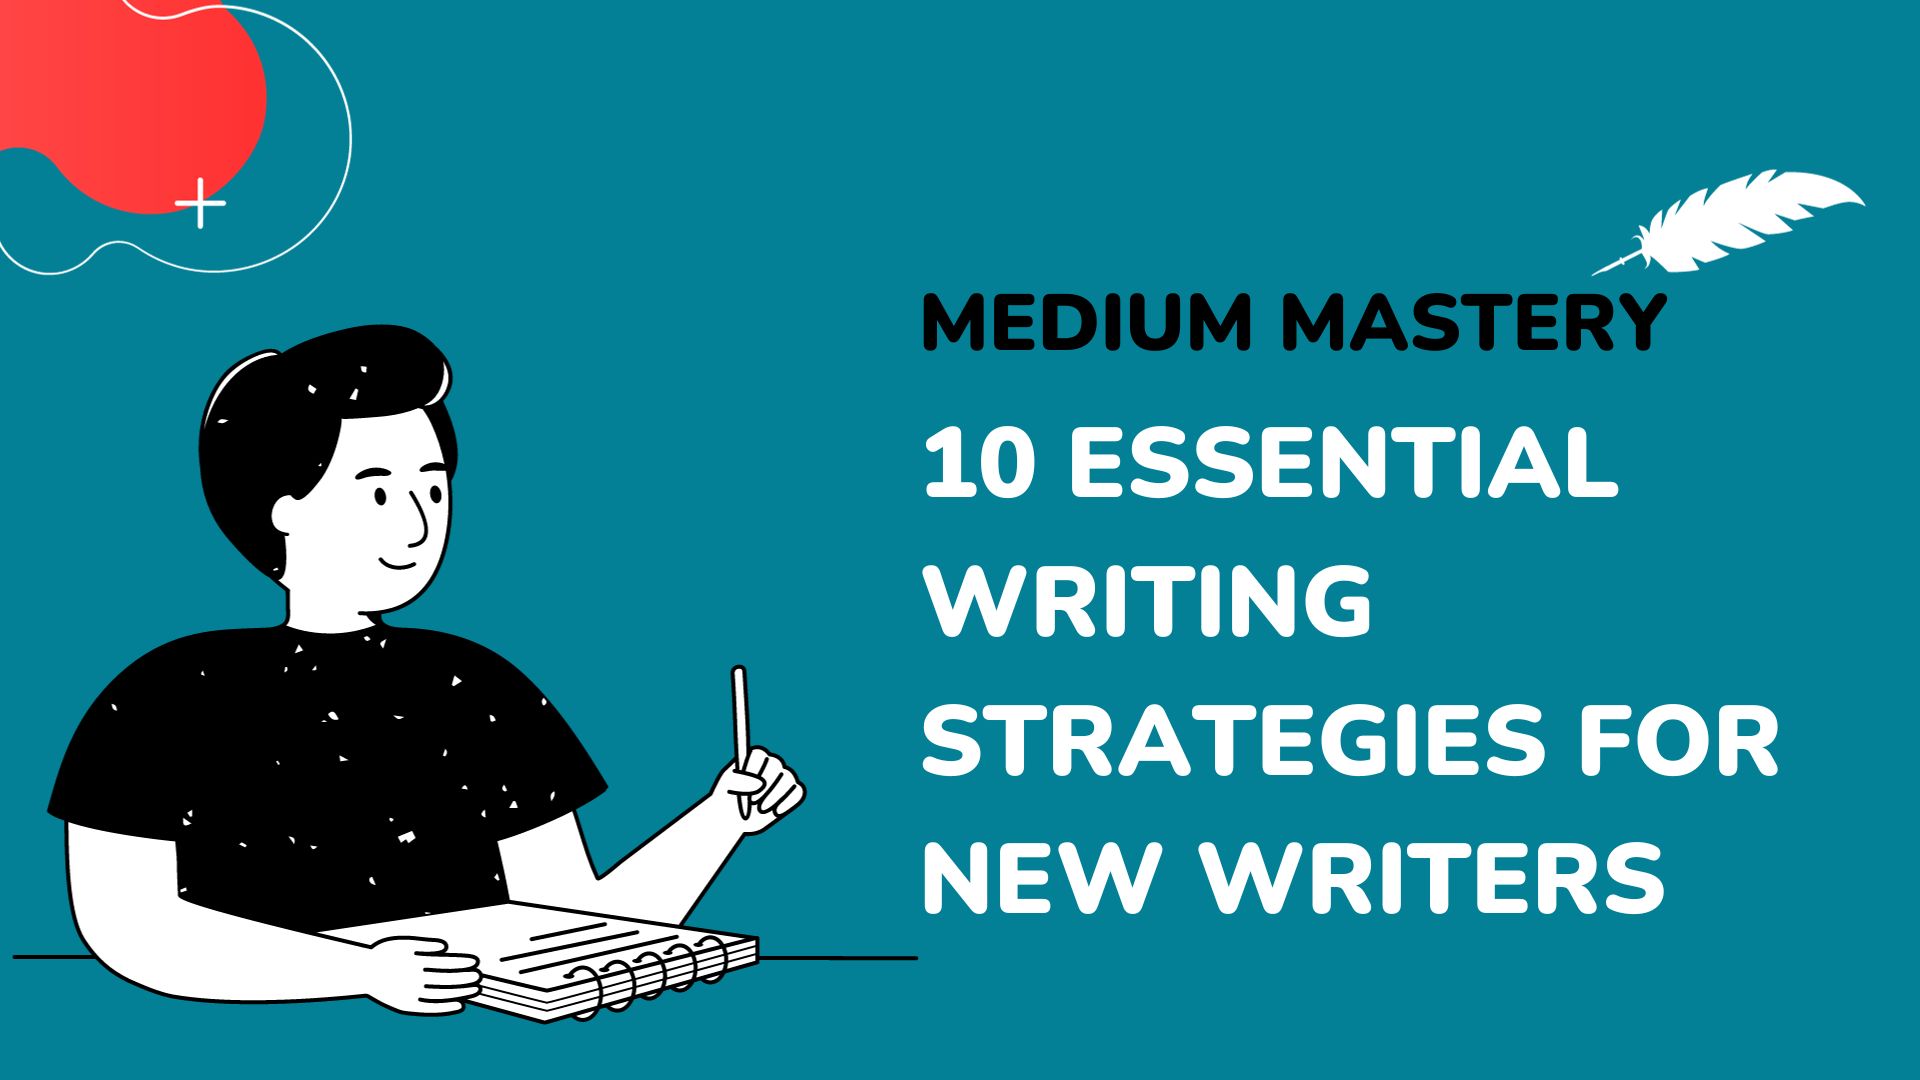 Medium Mastery - 10 Essential Writing Strategies for New Writers